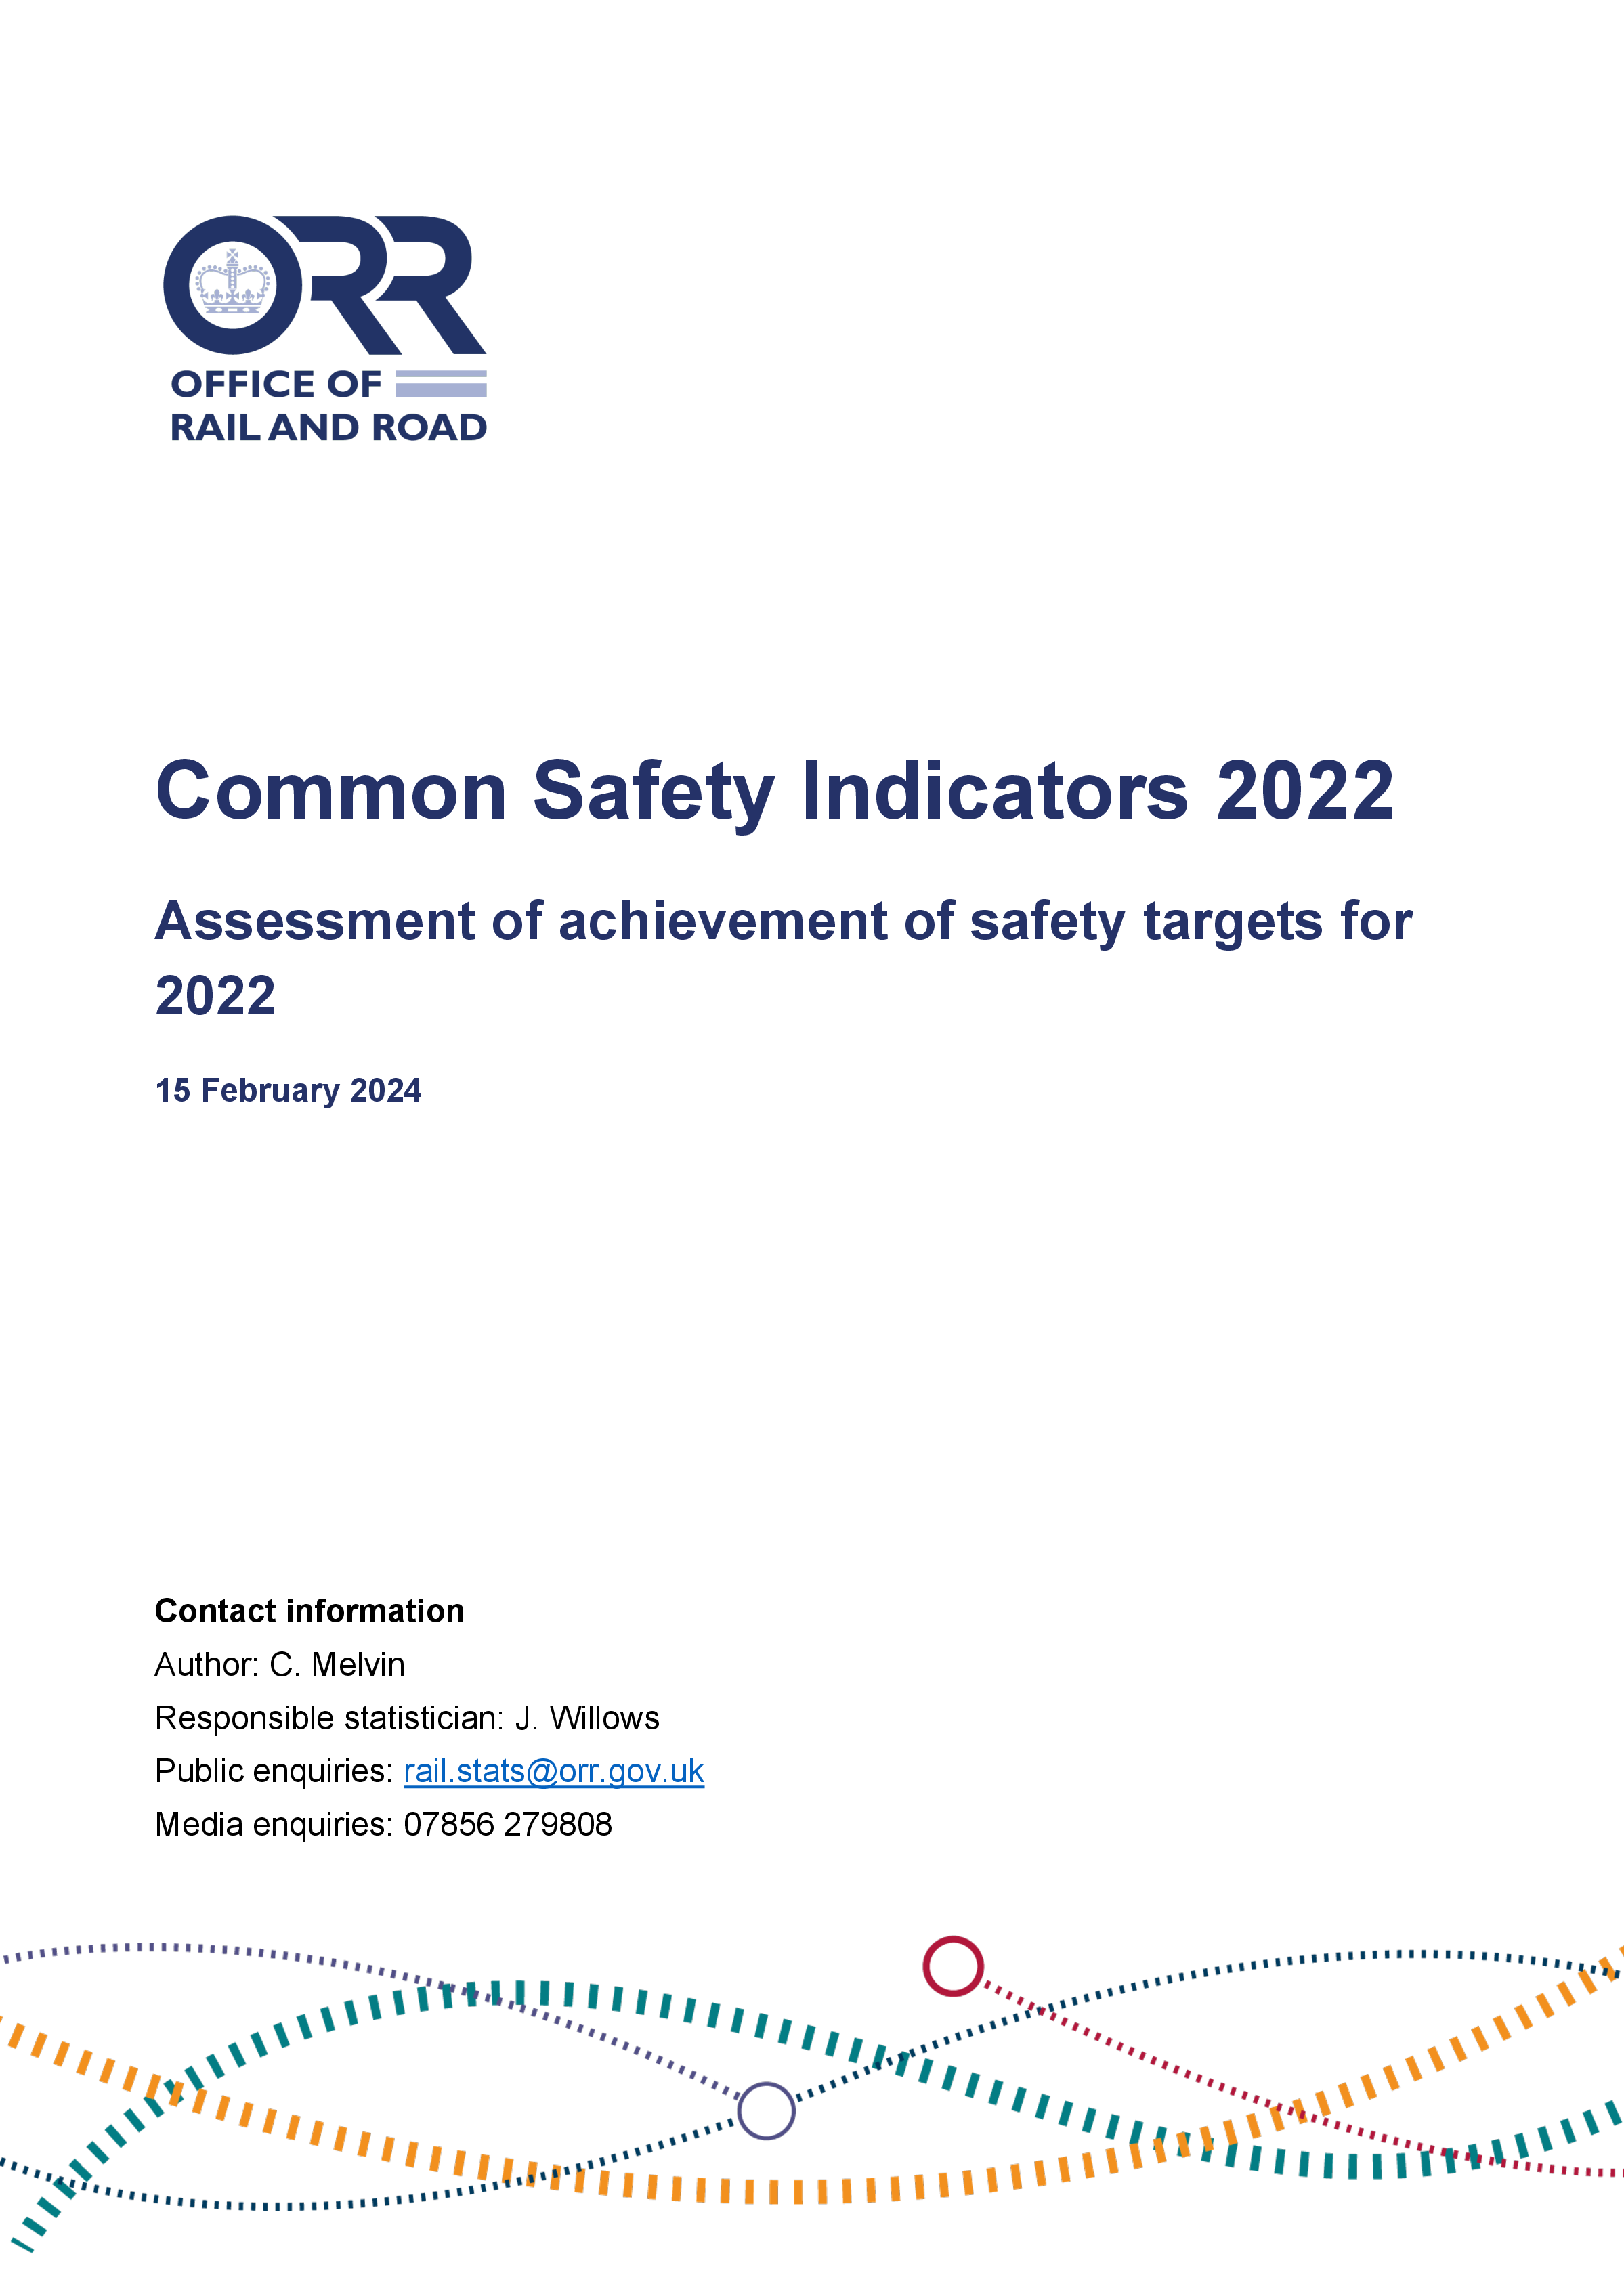 Common Safety Indicators, 2022